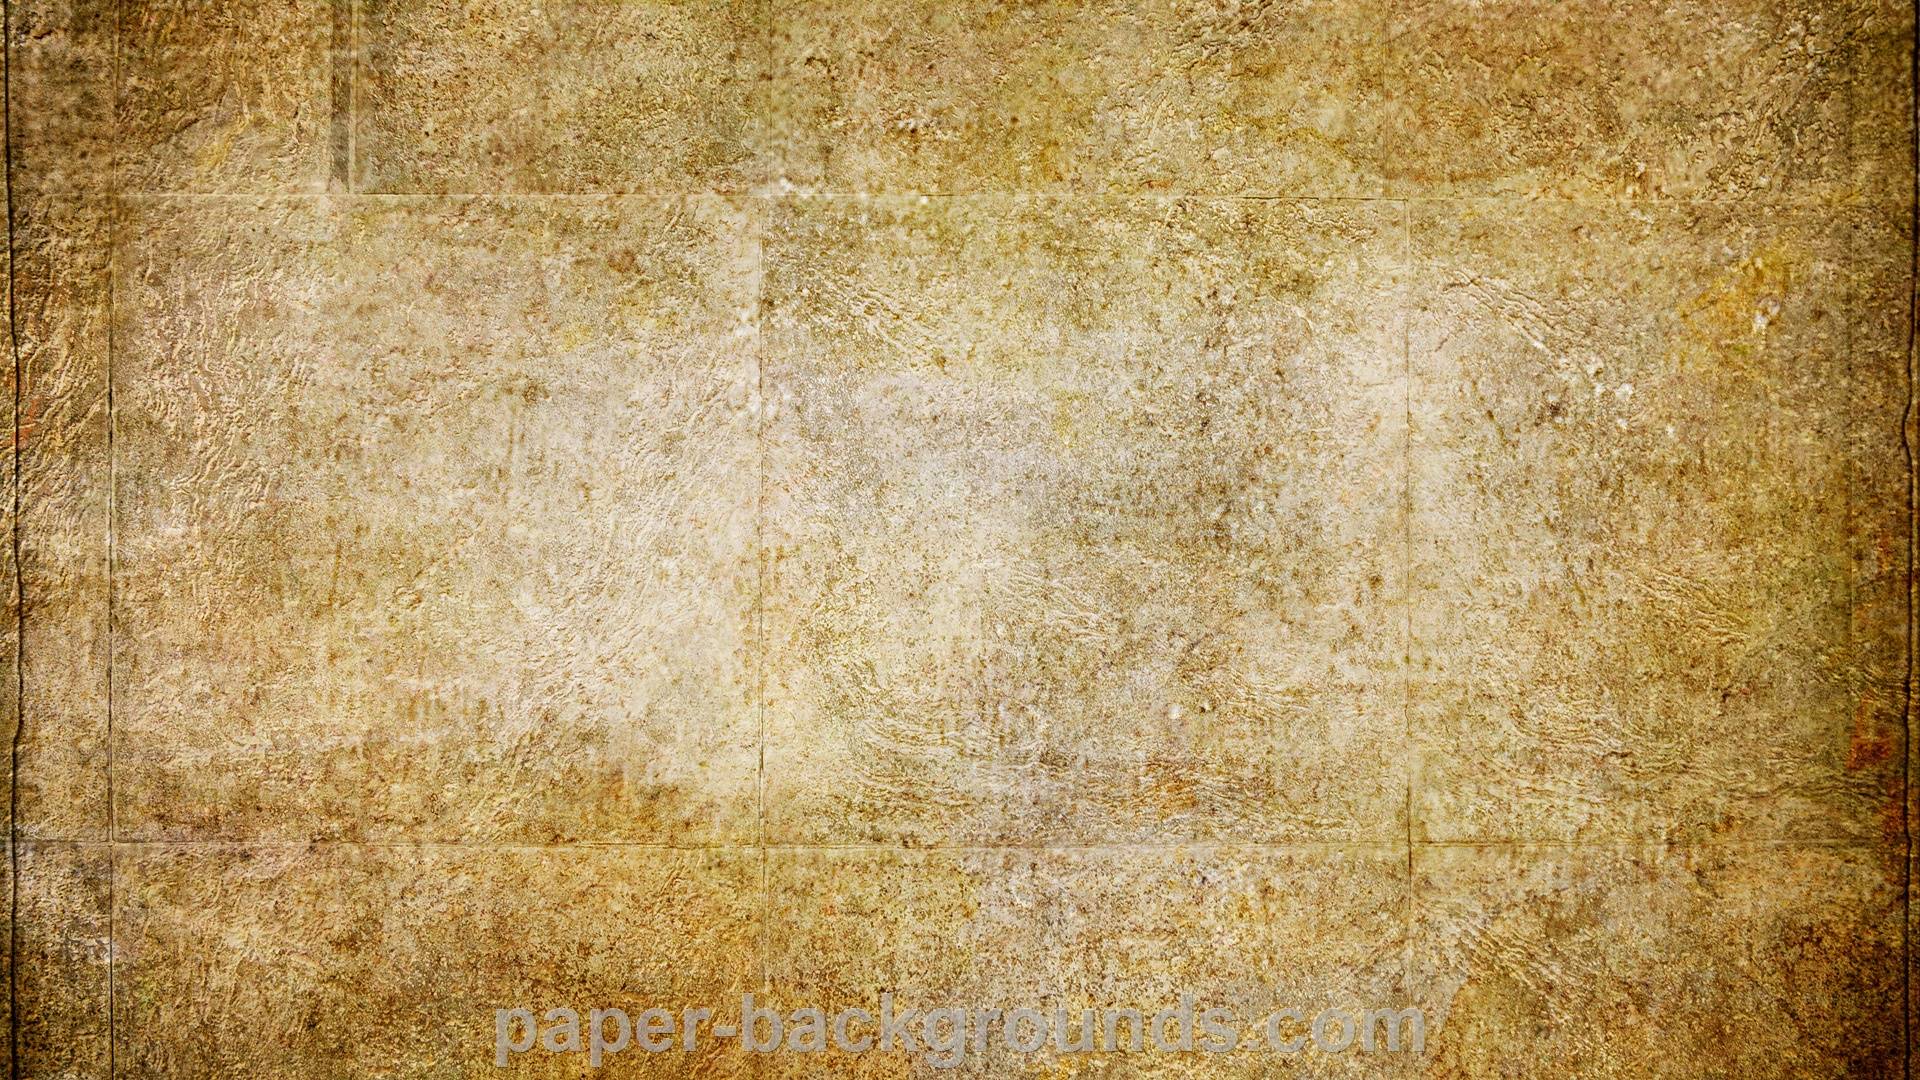 Download Grunge Wall Texture Paper Wallpaper 1920x1080. Full HD